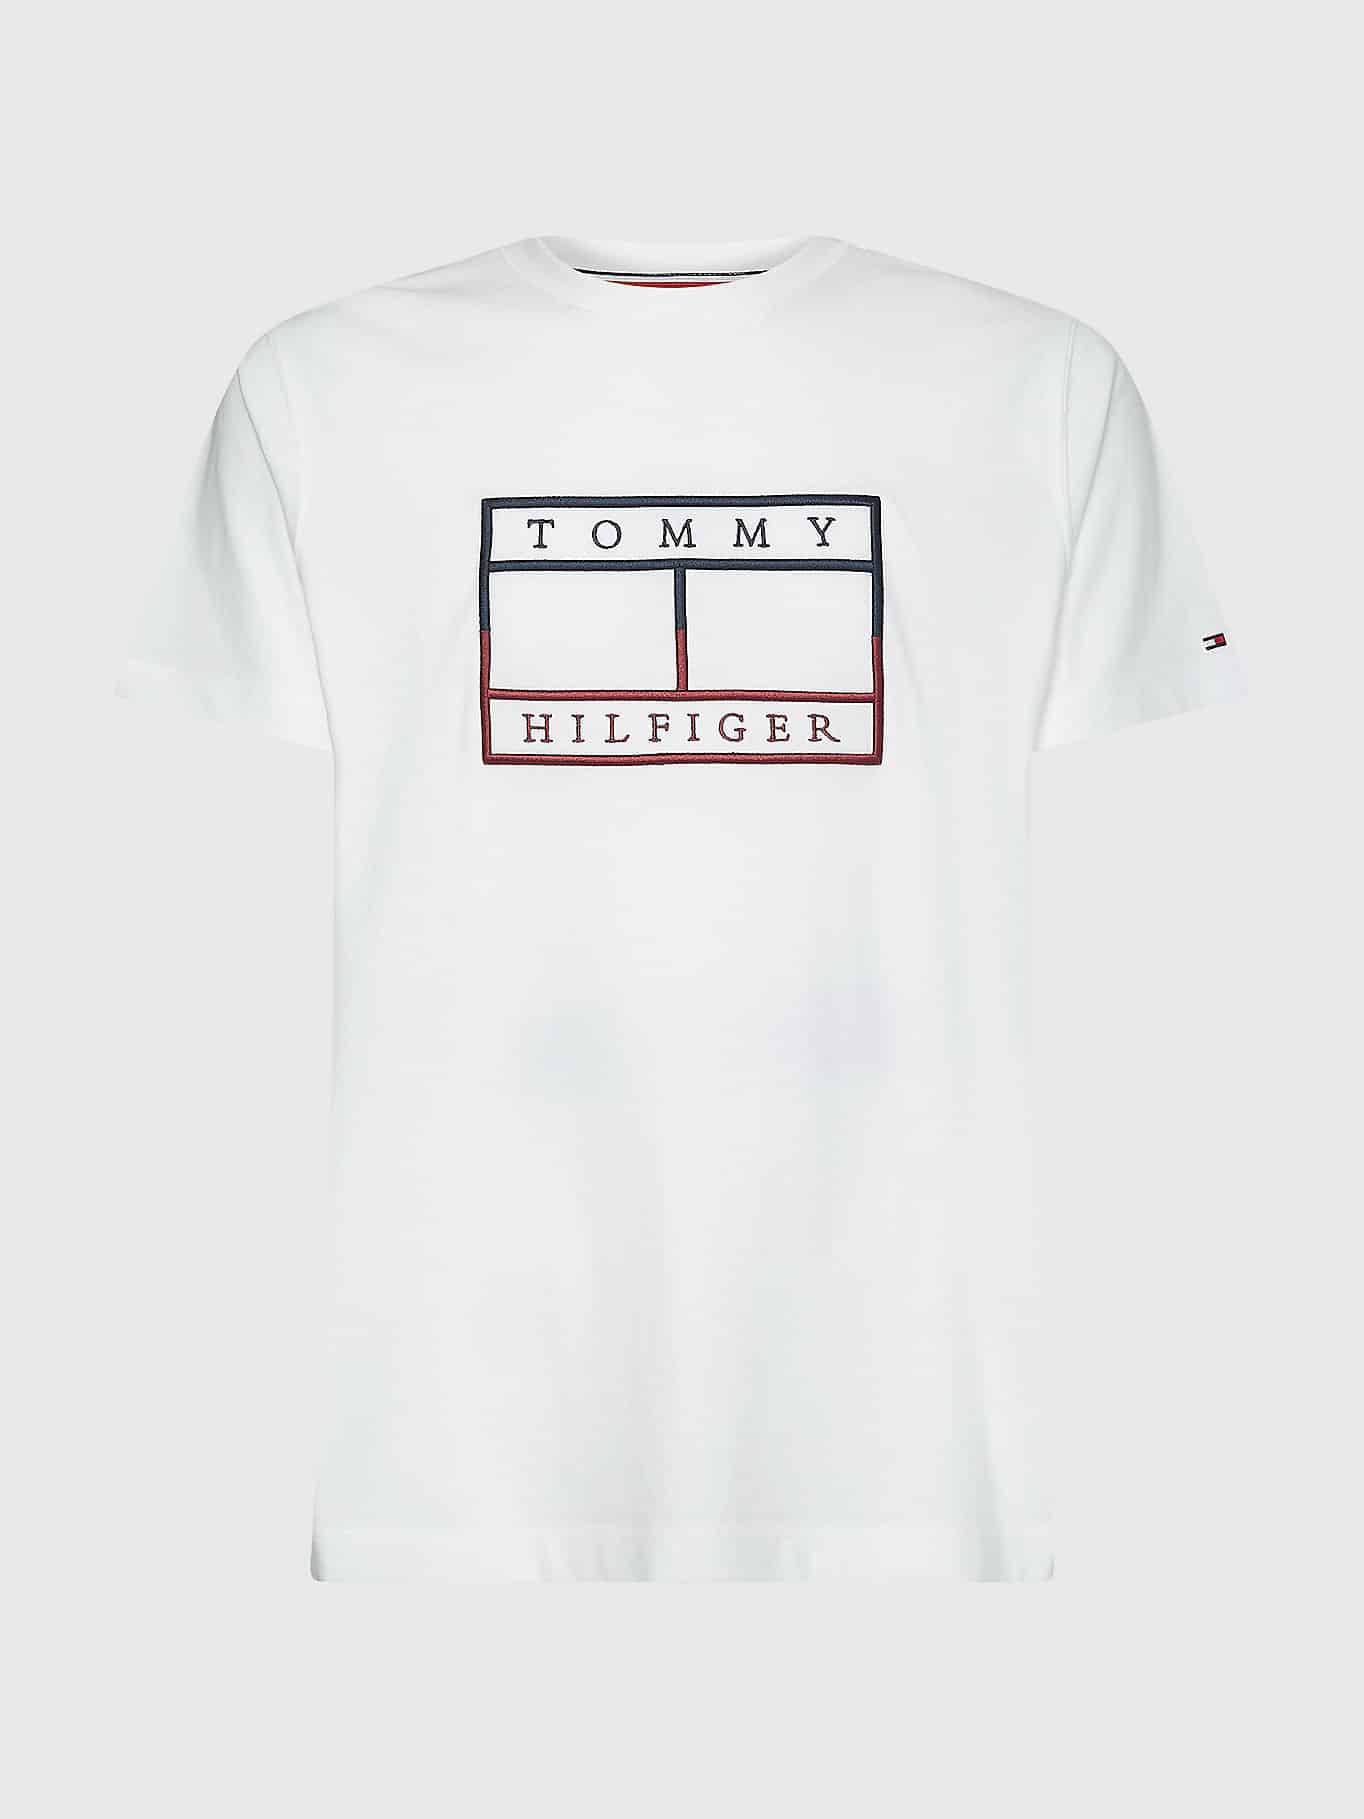 T-Shirts & Shirts, Tommy Hilfiger Shirt For Men 1